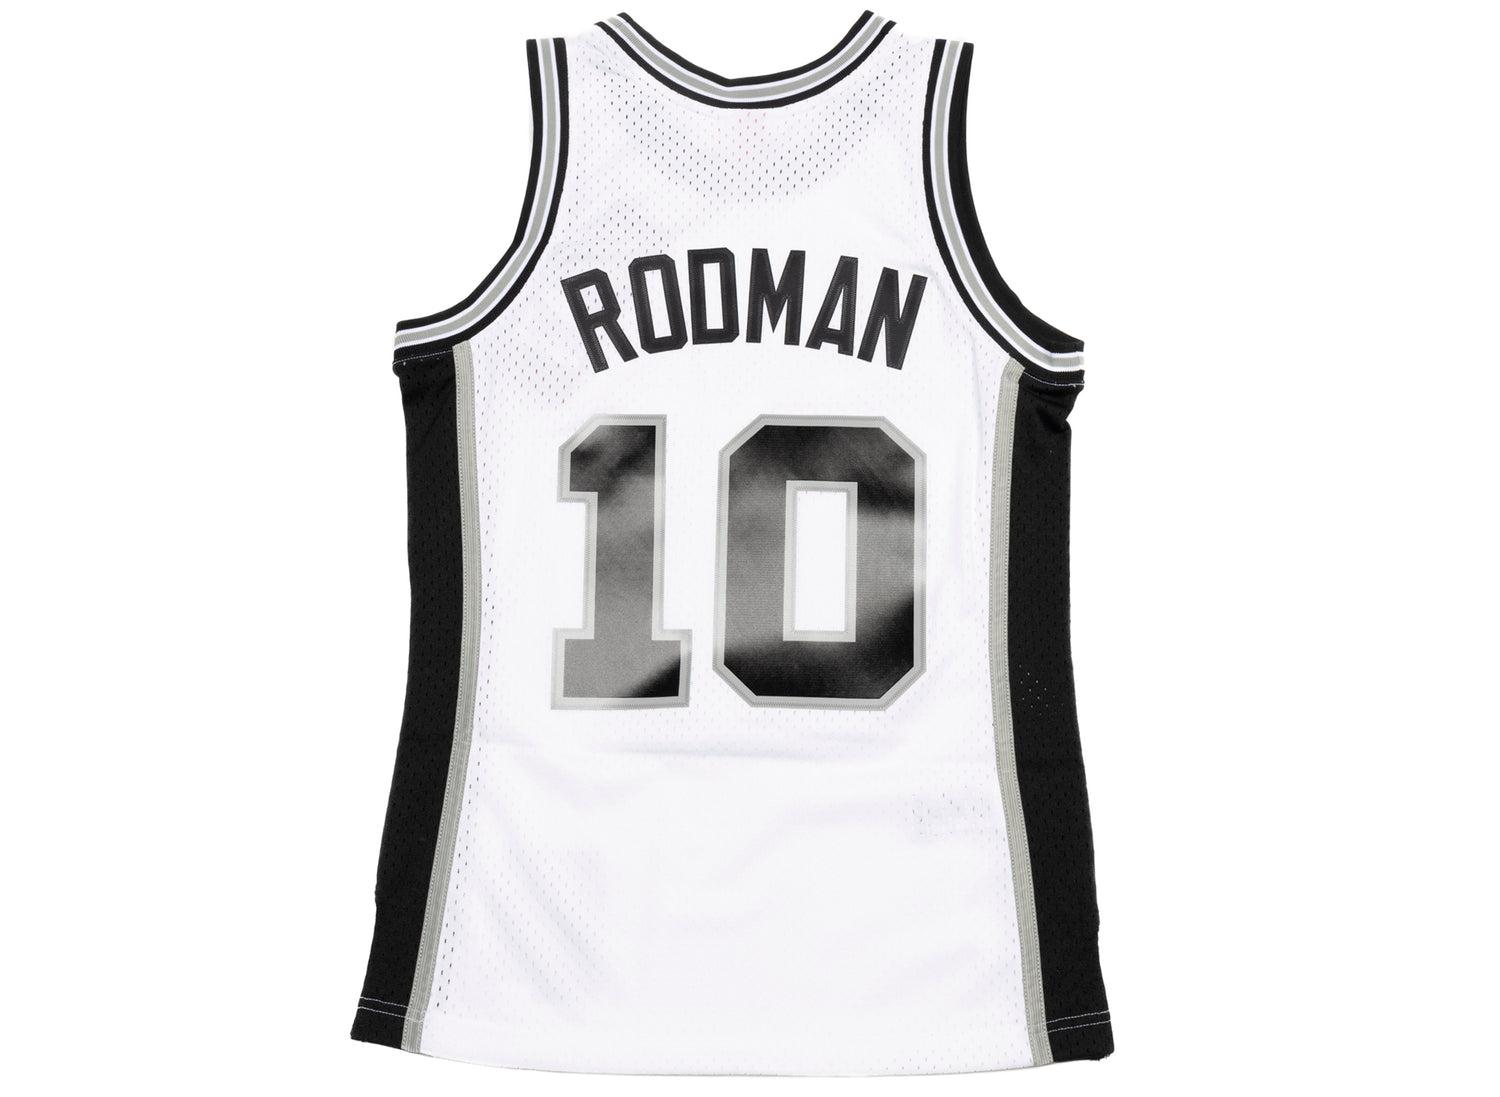  Dennis Rodman Jersey